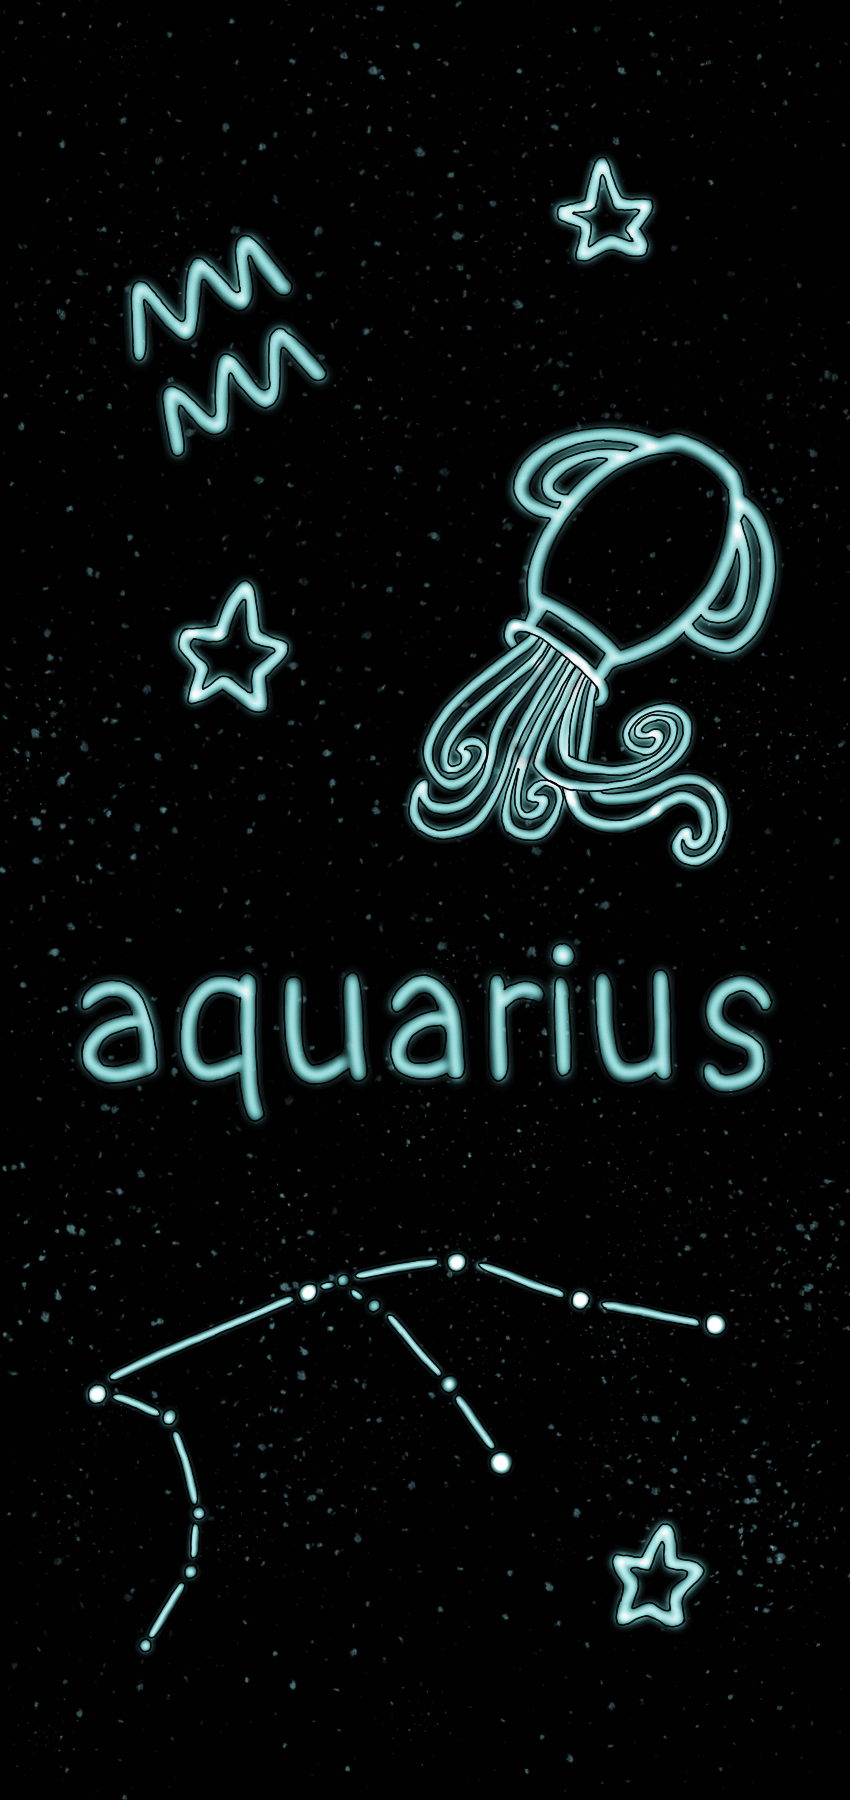 Aquarius wallpaper for iPhone with neon sign and constellations - Aquarius